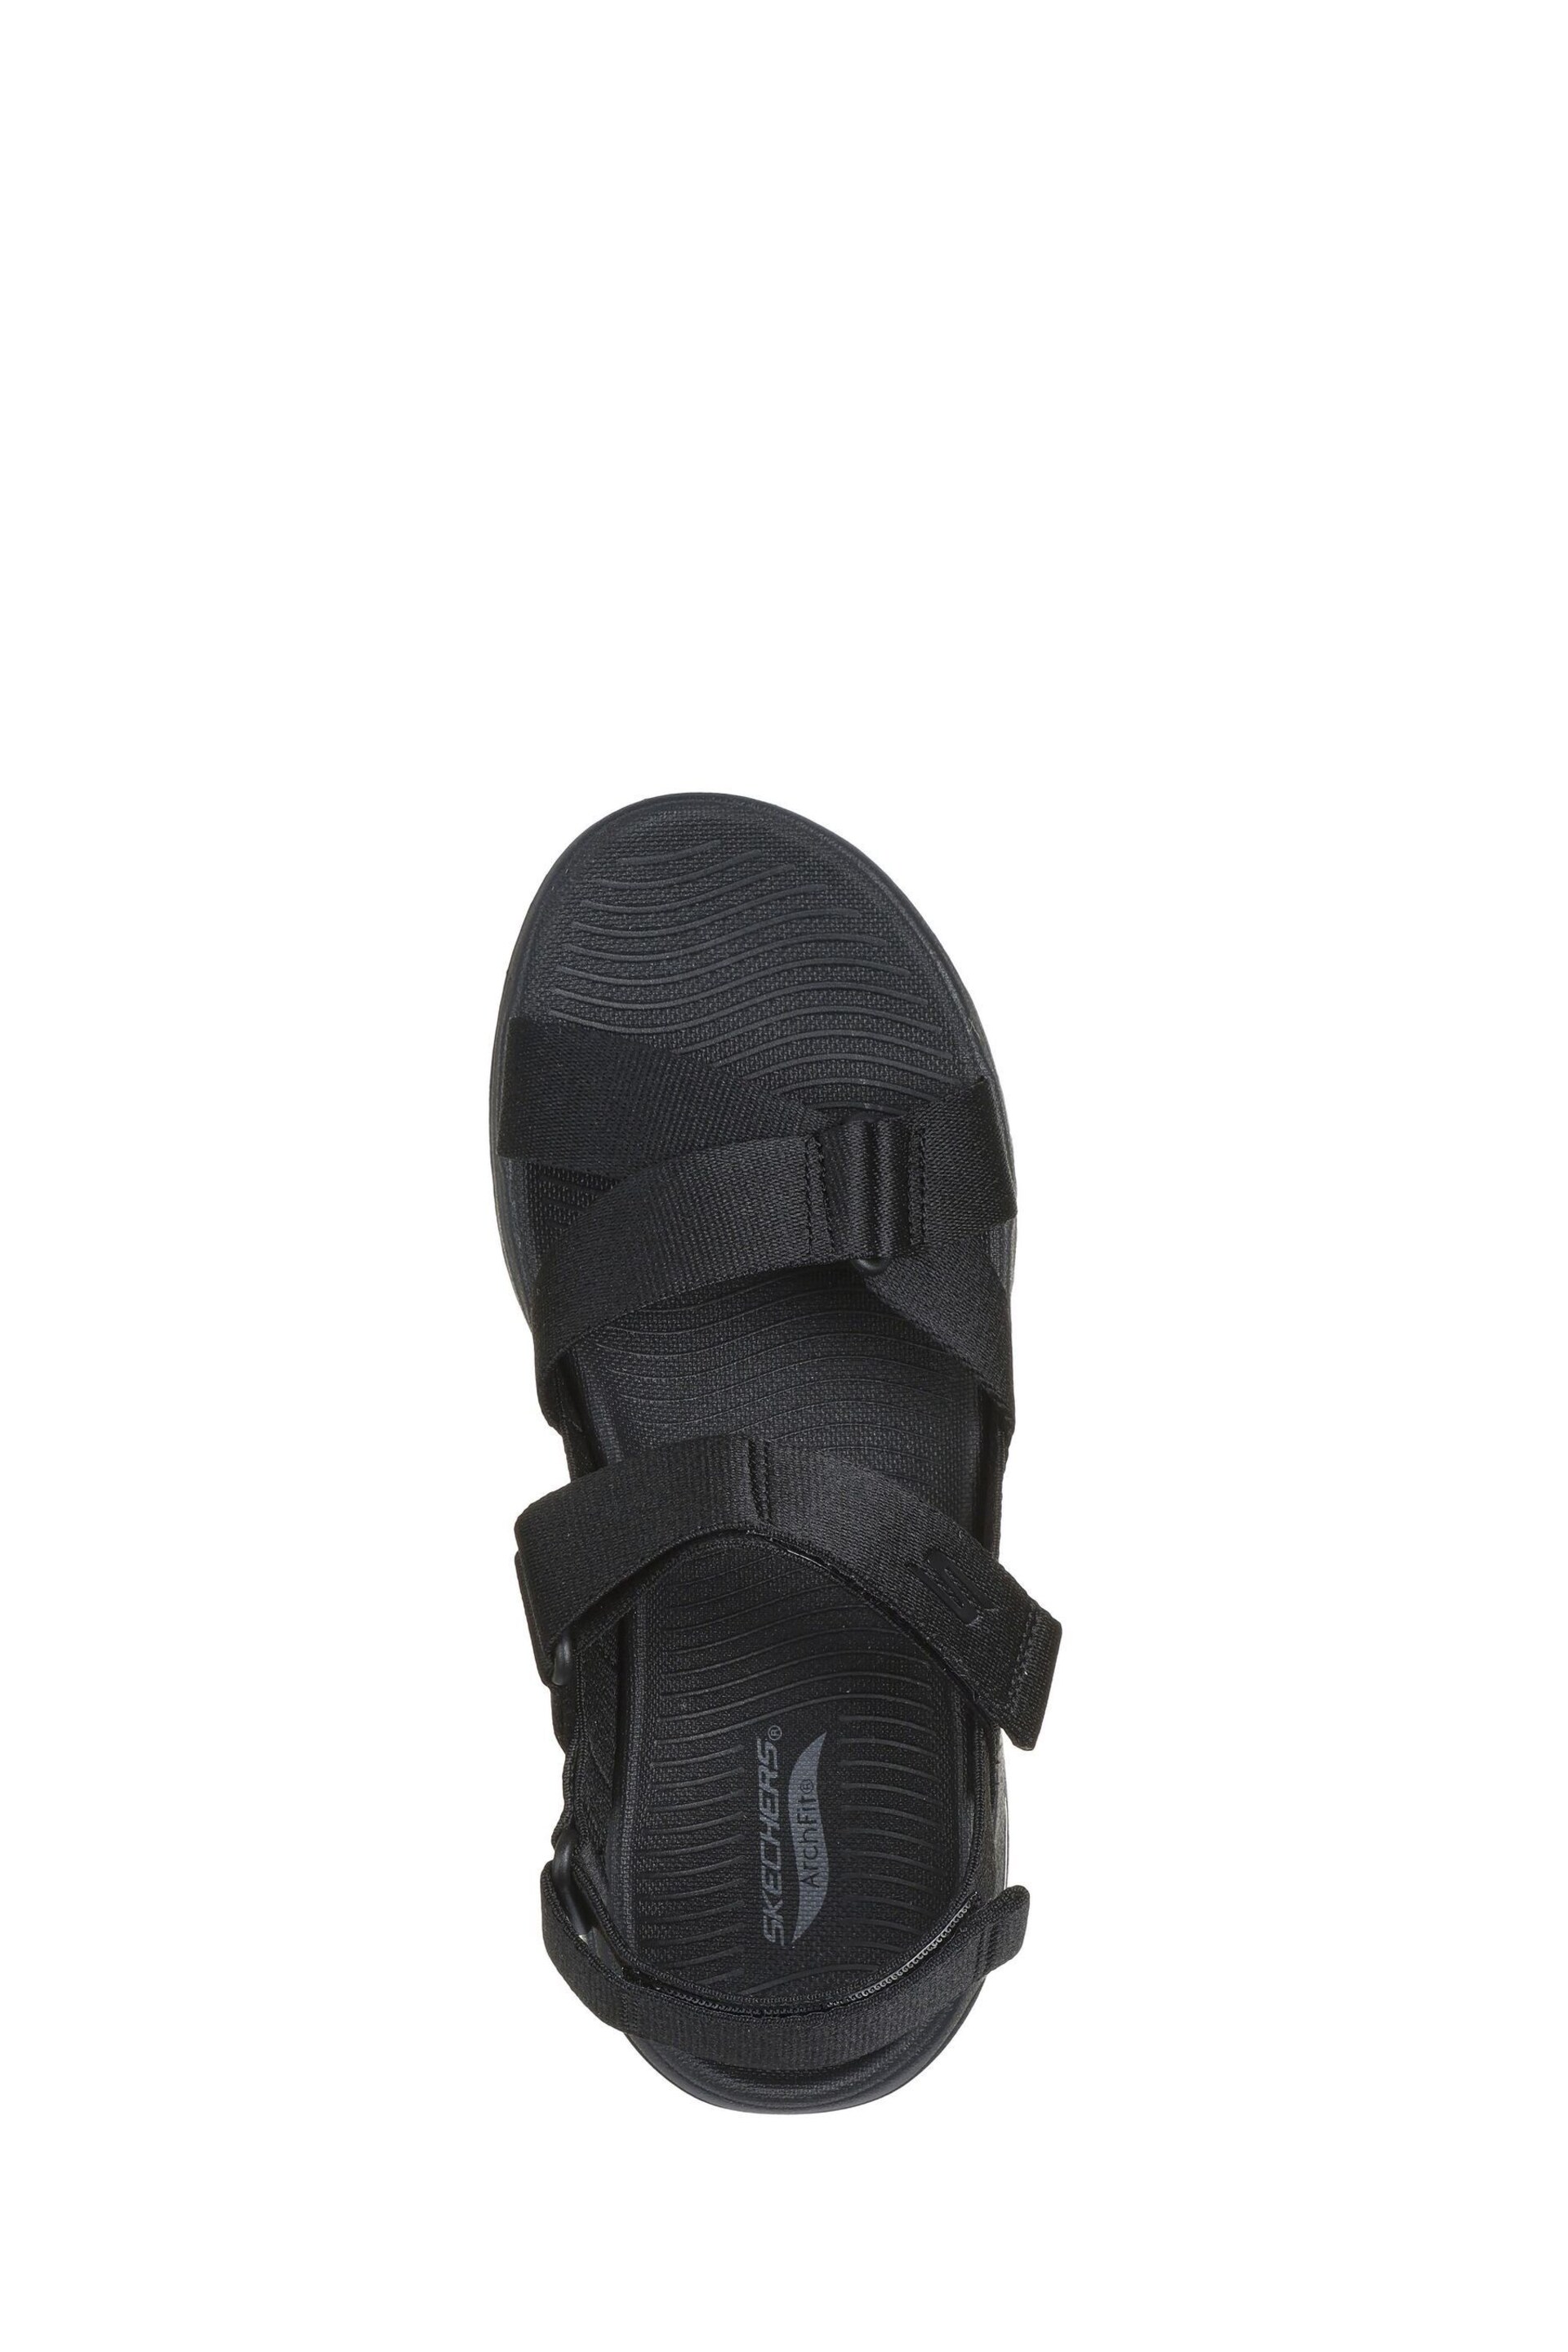 Skechers Black Go Walk Arch Fit Sandals - Image 4 of 5